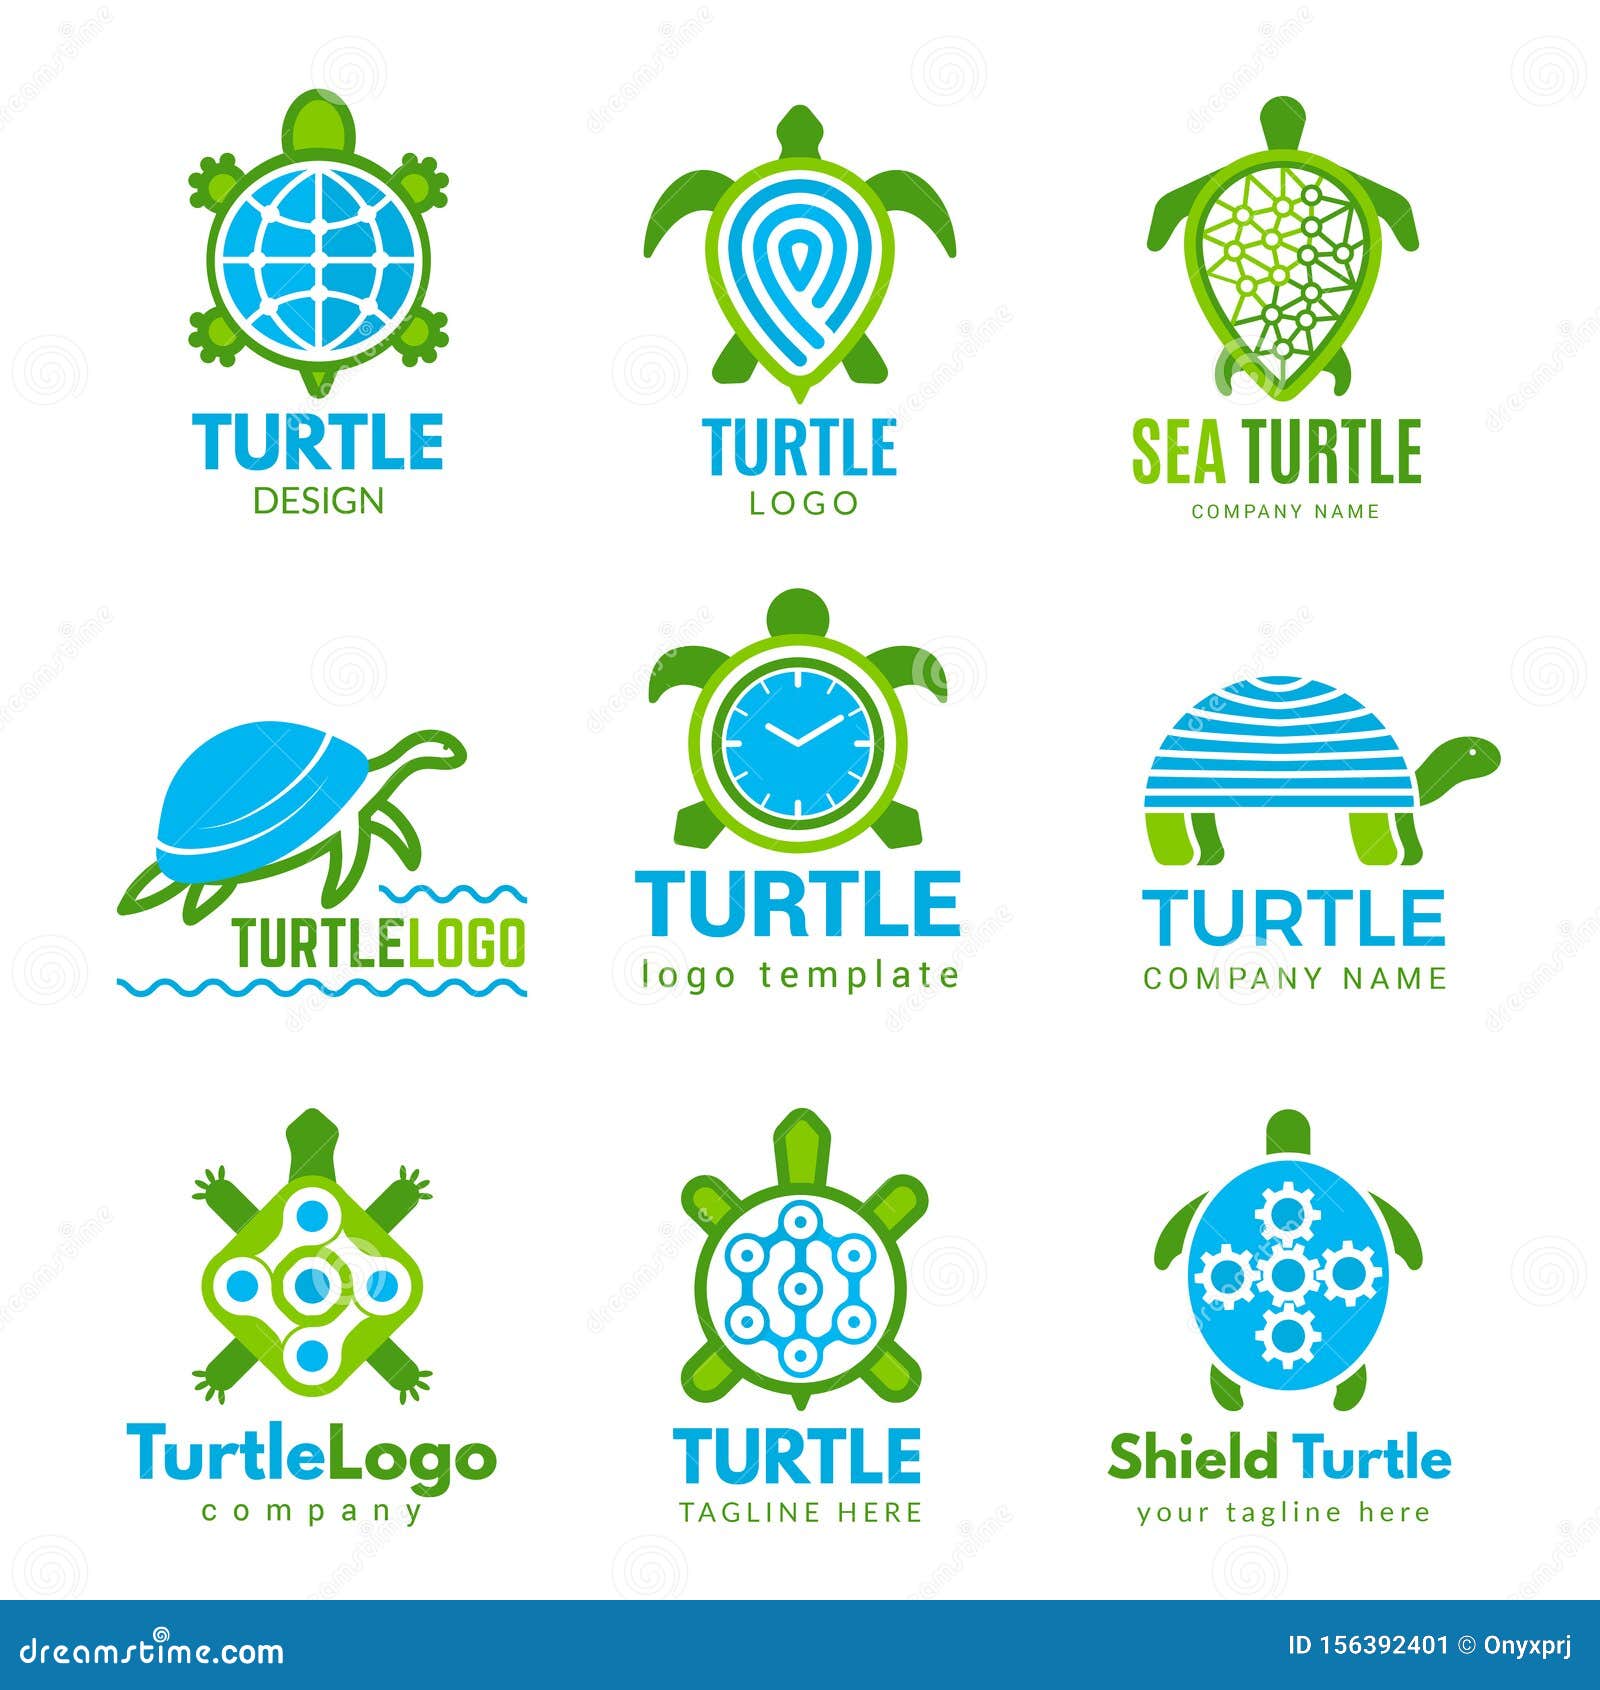 Turtle Logo. Ocean Wild Animal Stylized Symbols Tattoo Designs Vector Turtle  Business Identity Stock Vector - Illustration of background, ocean:  156392401